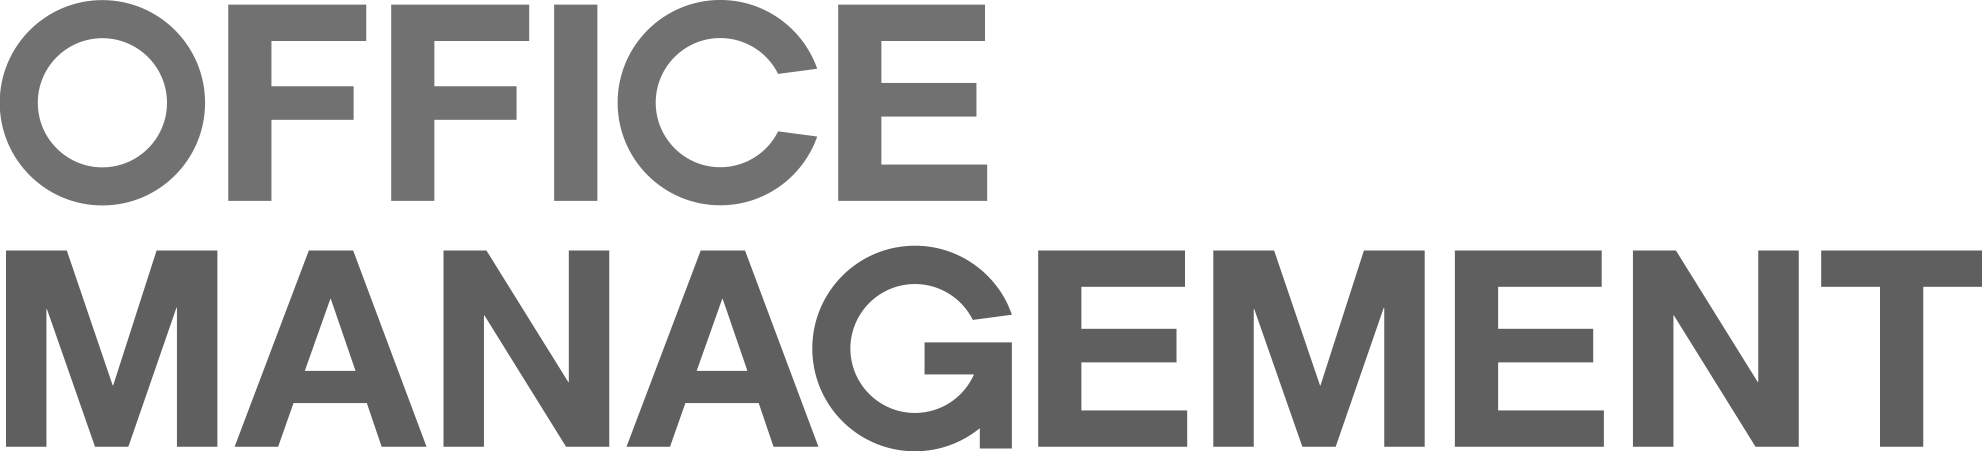 office management logo